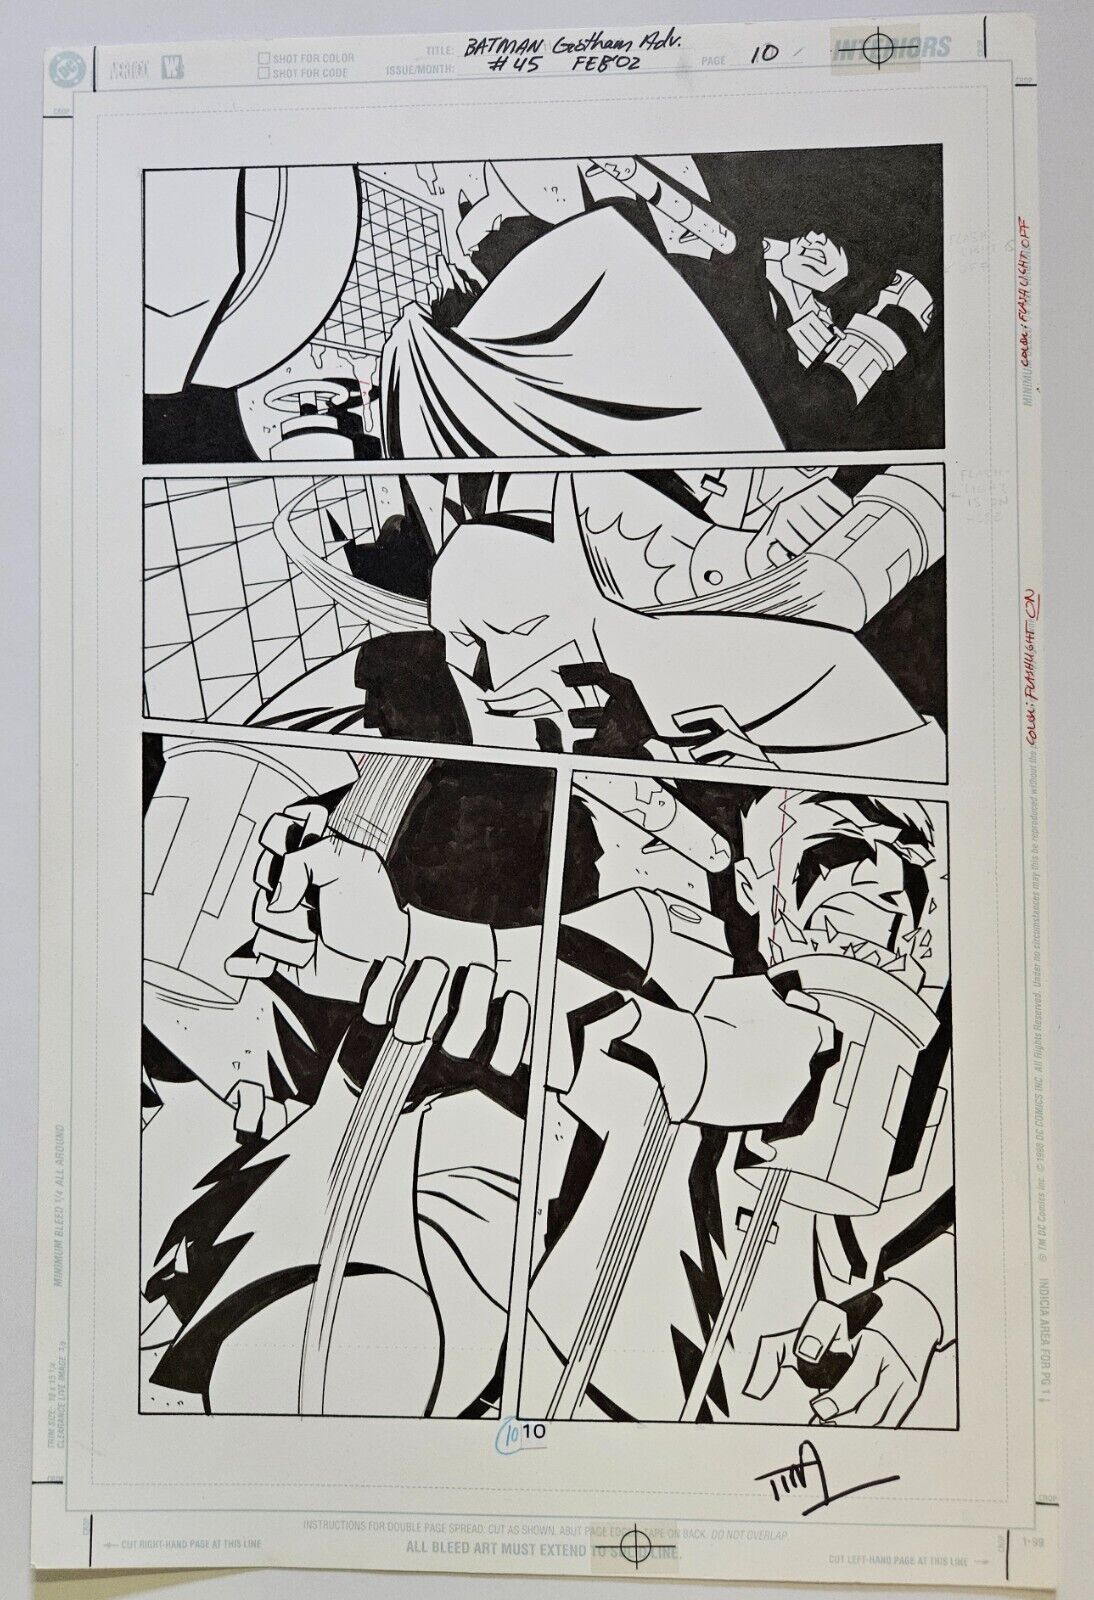 BATMAN GOTHAM ADVENTURES #45 pg 10 ORIGINAL COMIC ART PAGE BTAS ANIMATED SERIES